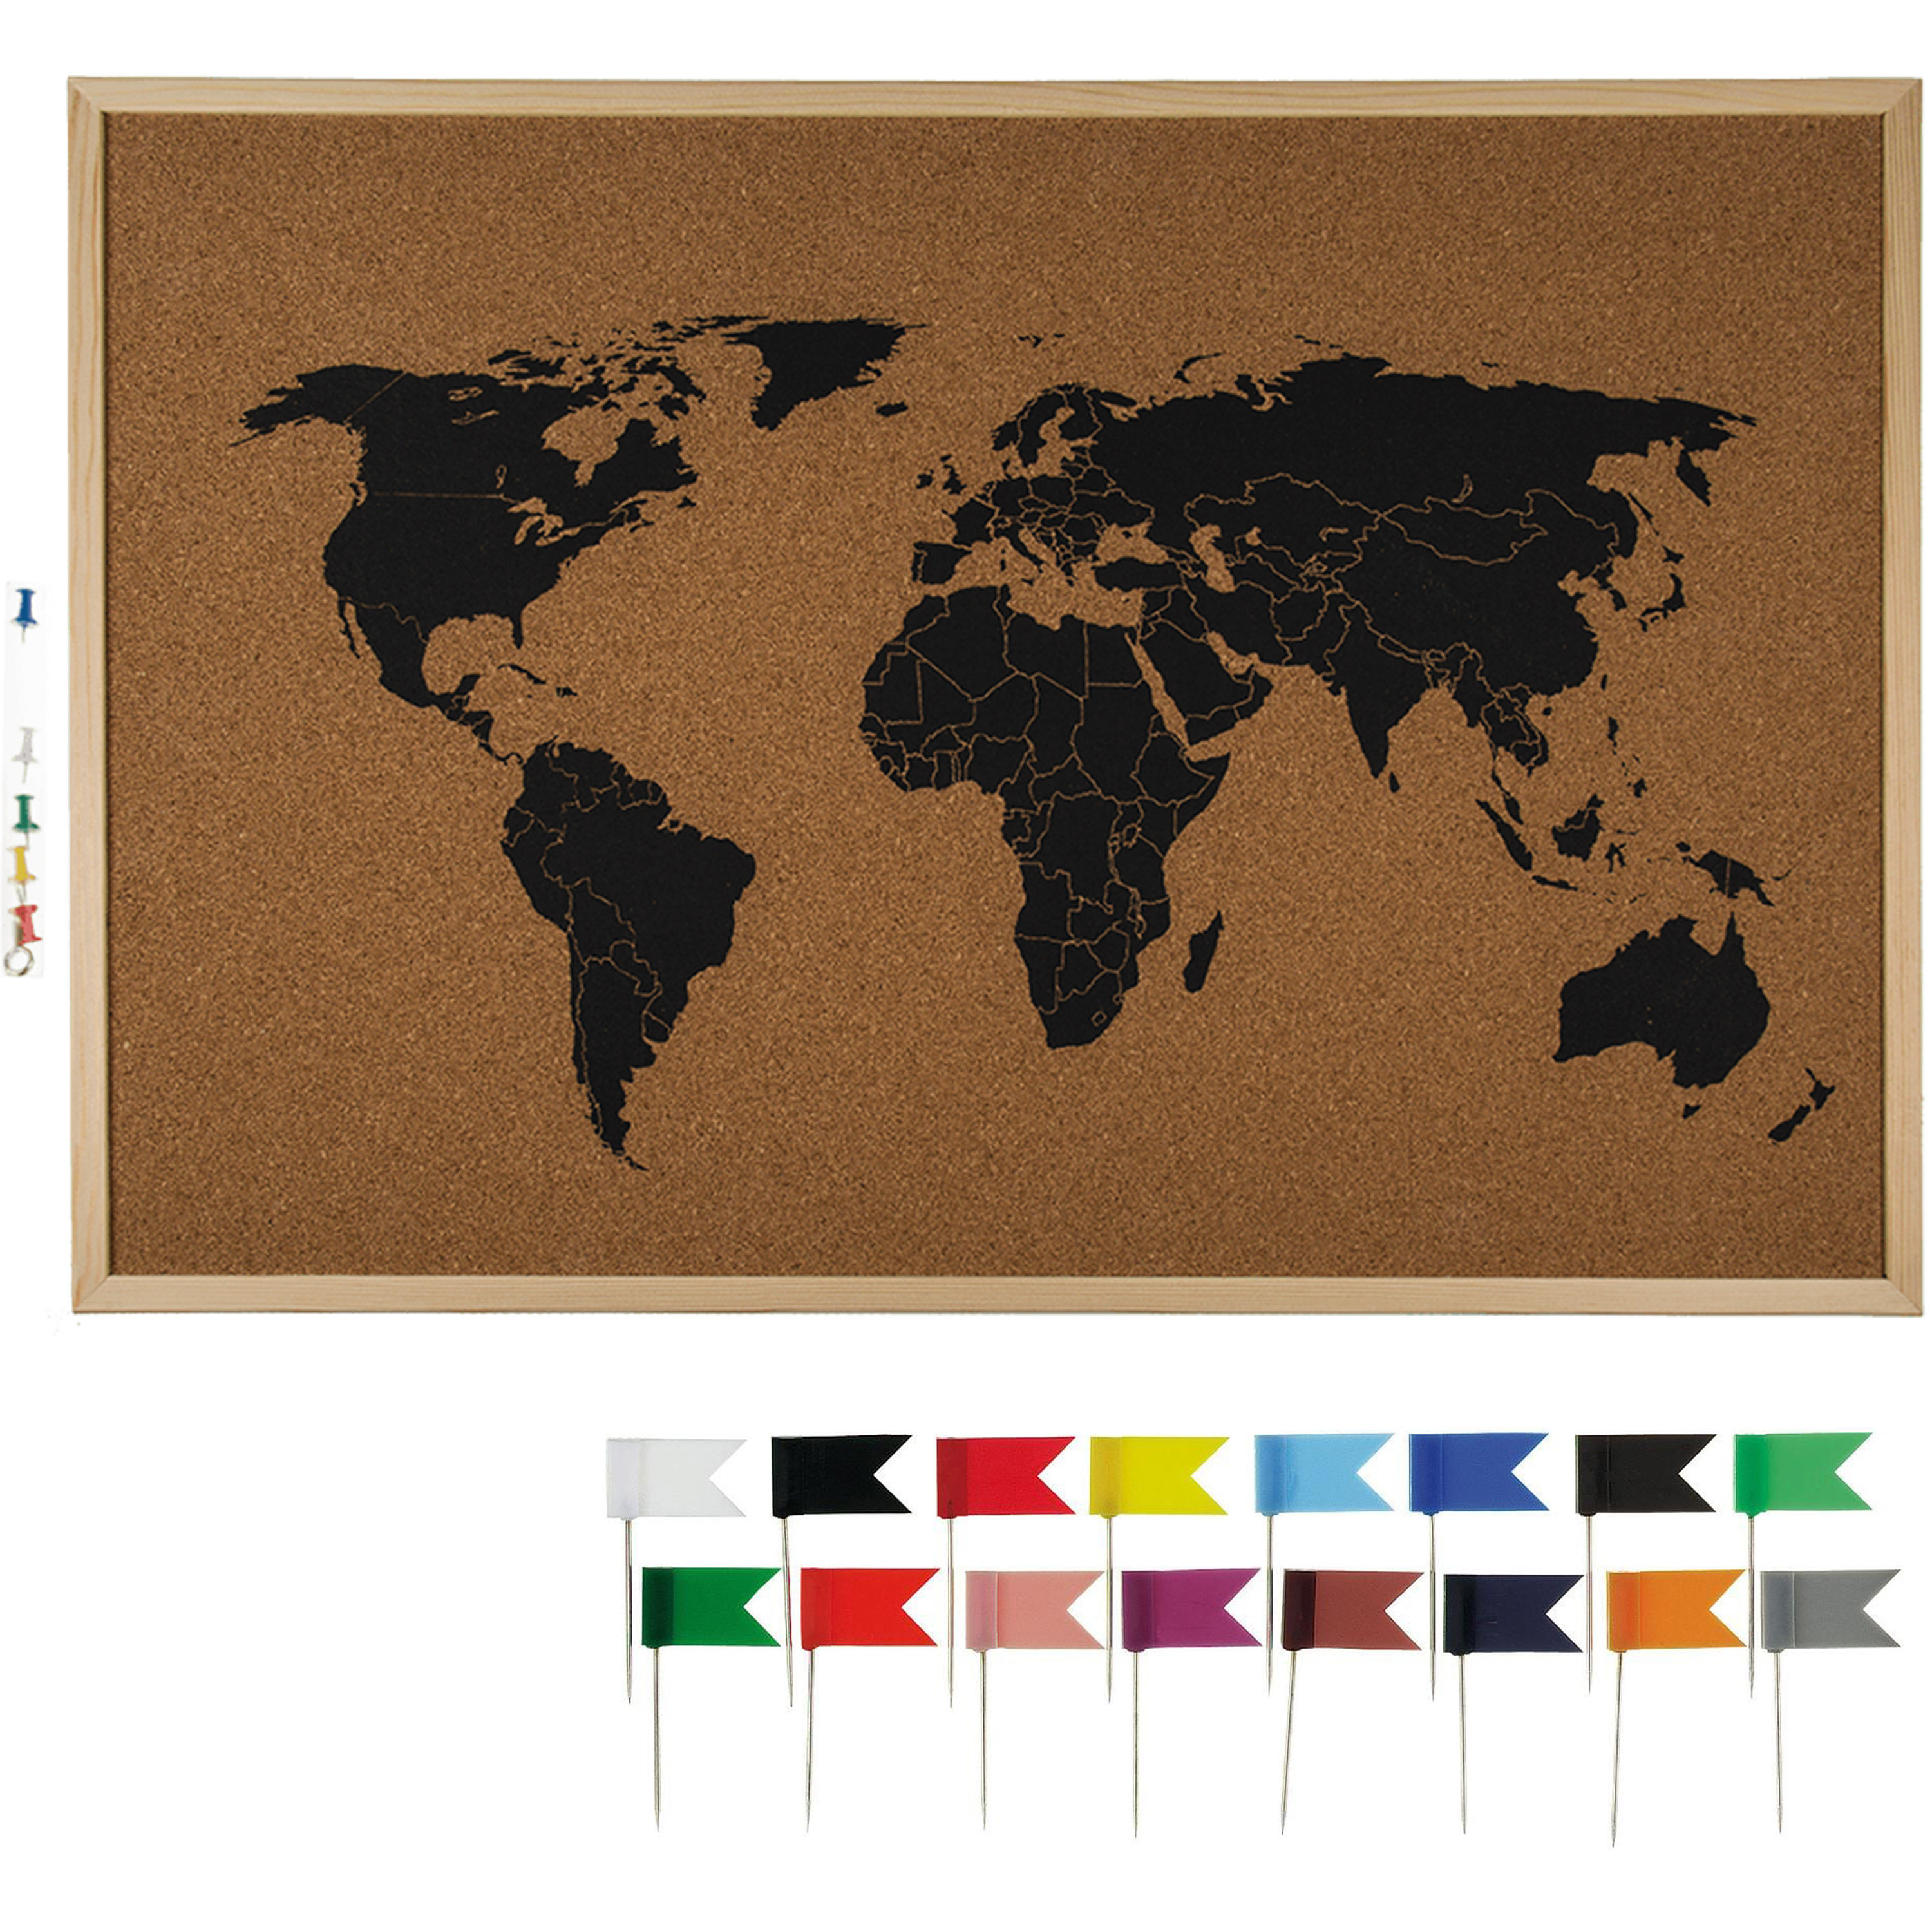 Prikbord wereldkaart met 20x punaise vlaggetjes 60 x 40 cm kurk